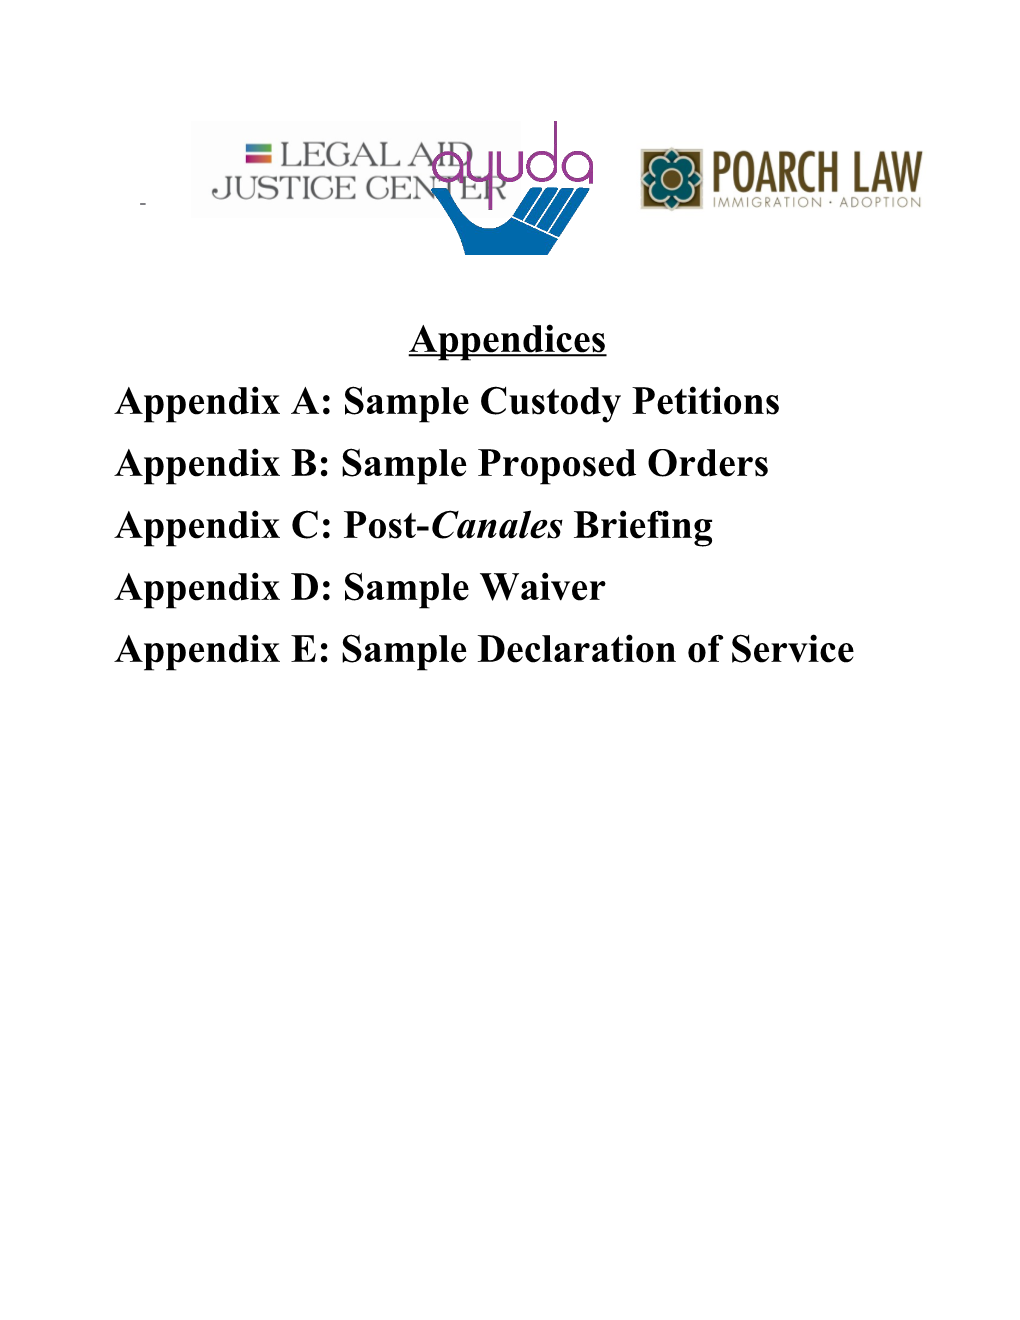 Appendix A: Sample Custody Petitions